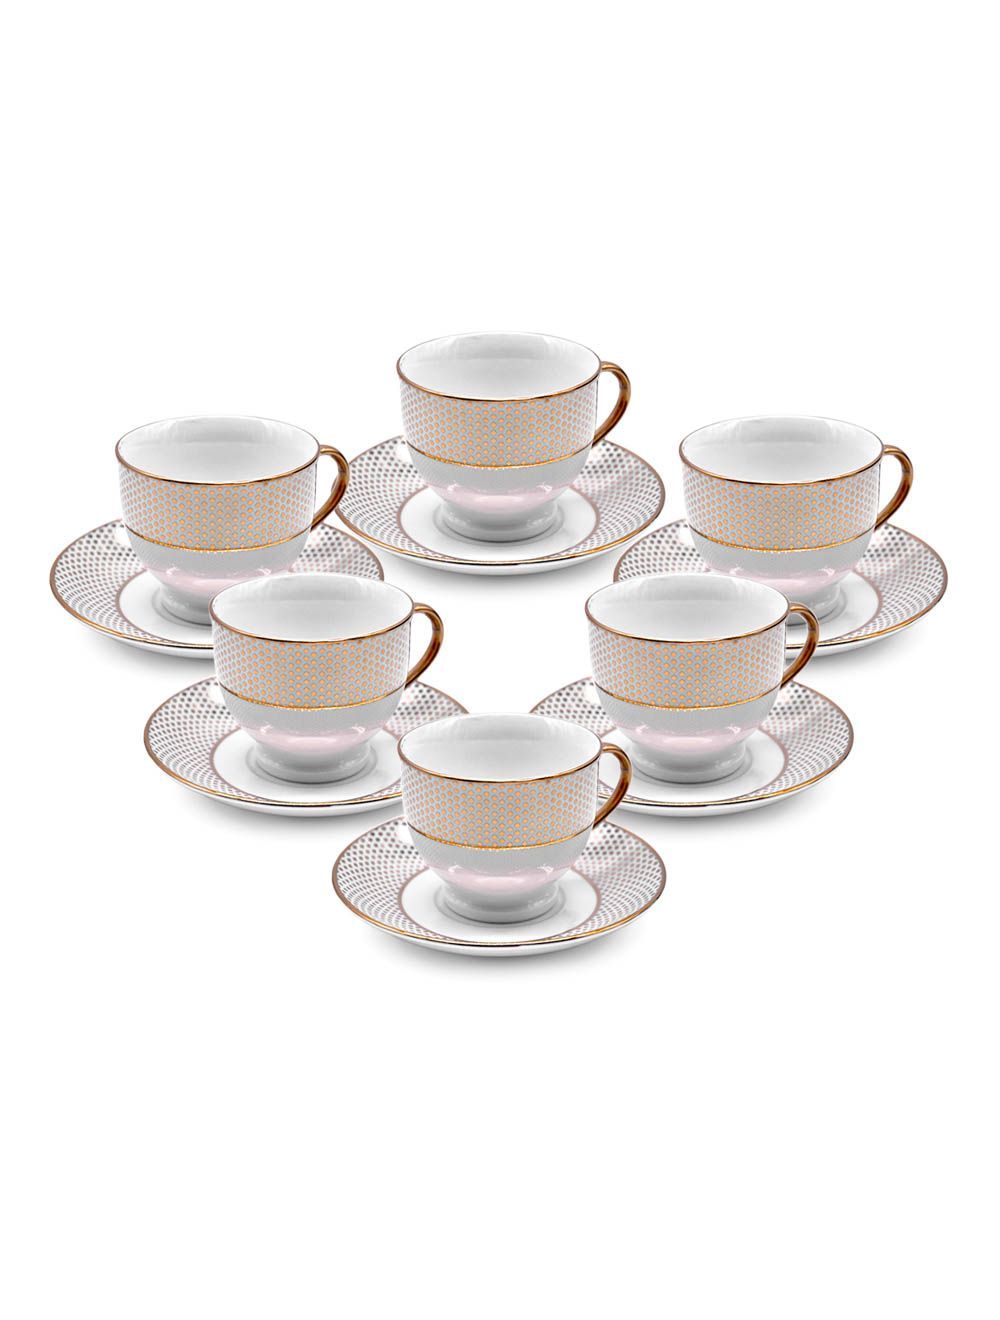 12 Pieces Tea Cup And Saucer-Gold